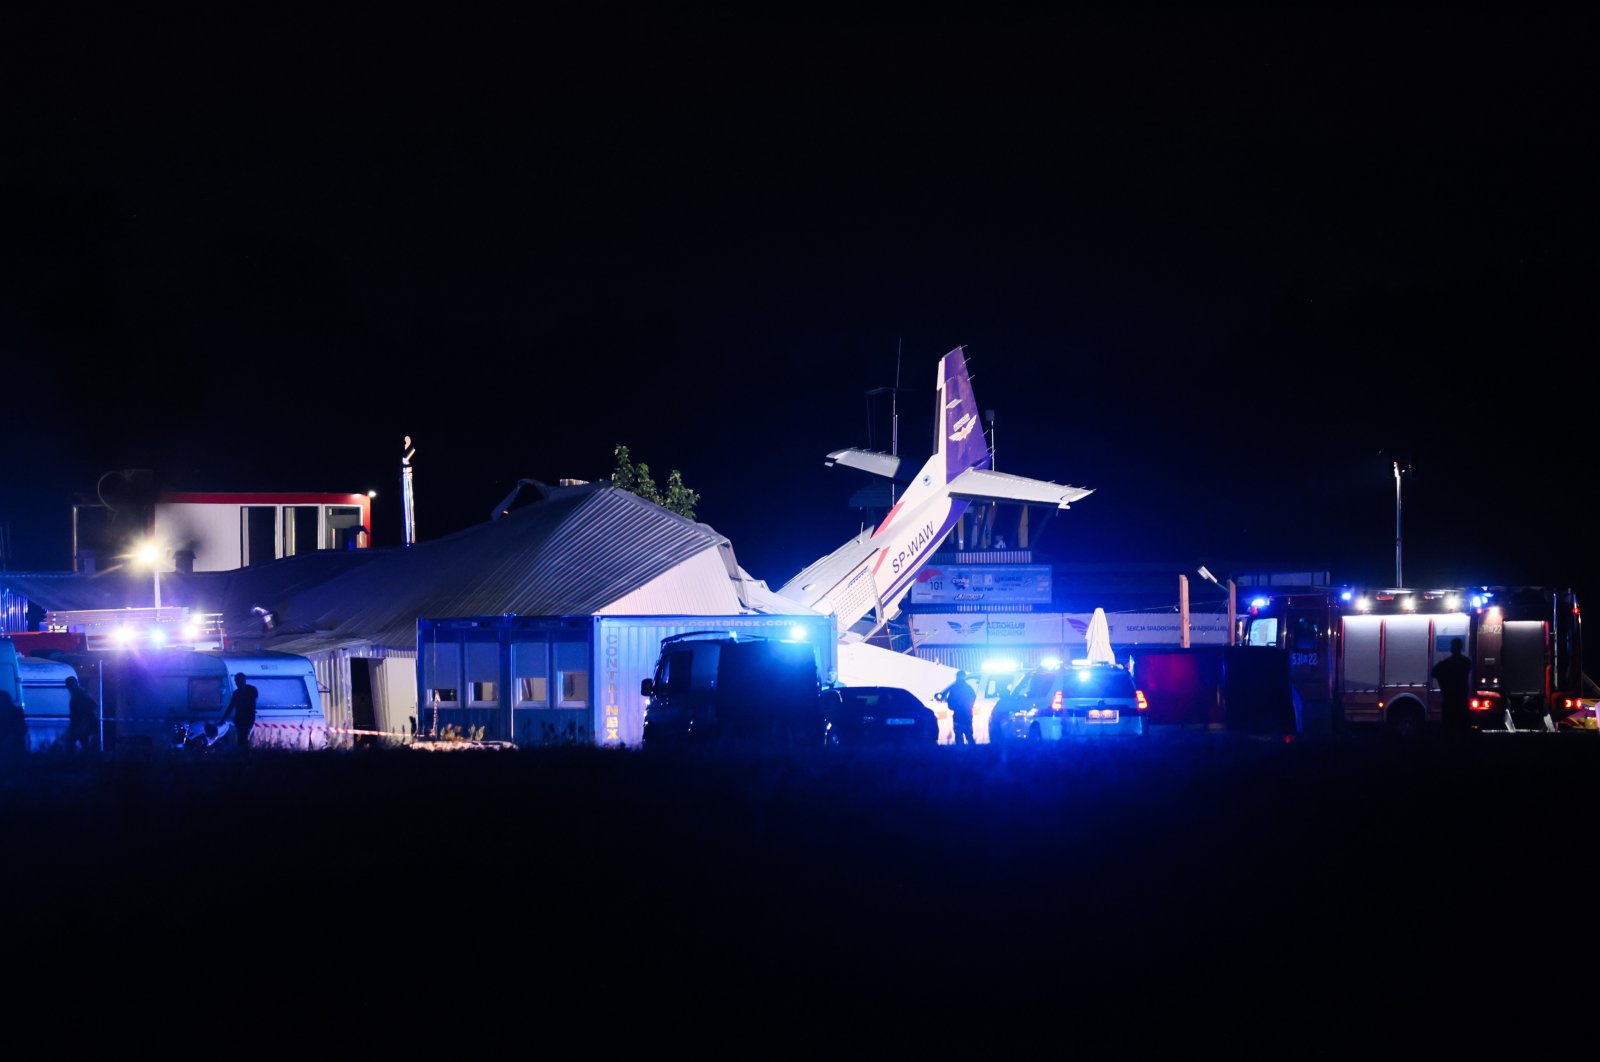 5 tewas setelah pesawat kecil jatuh di tempat penampungan badai di Polandia